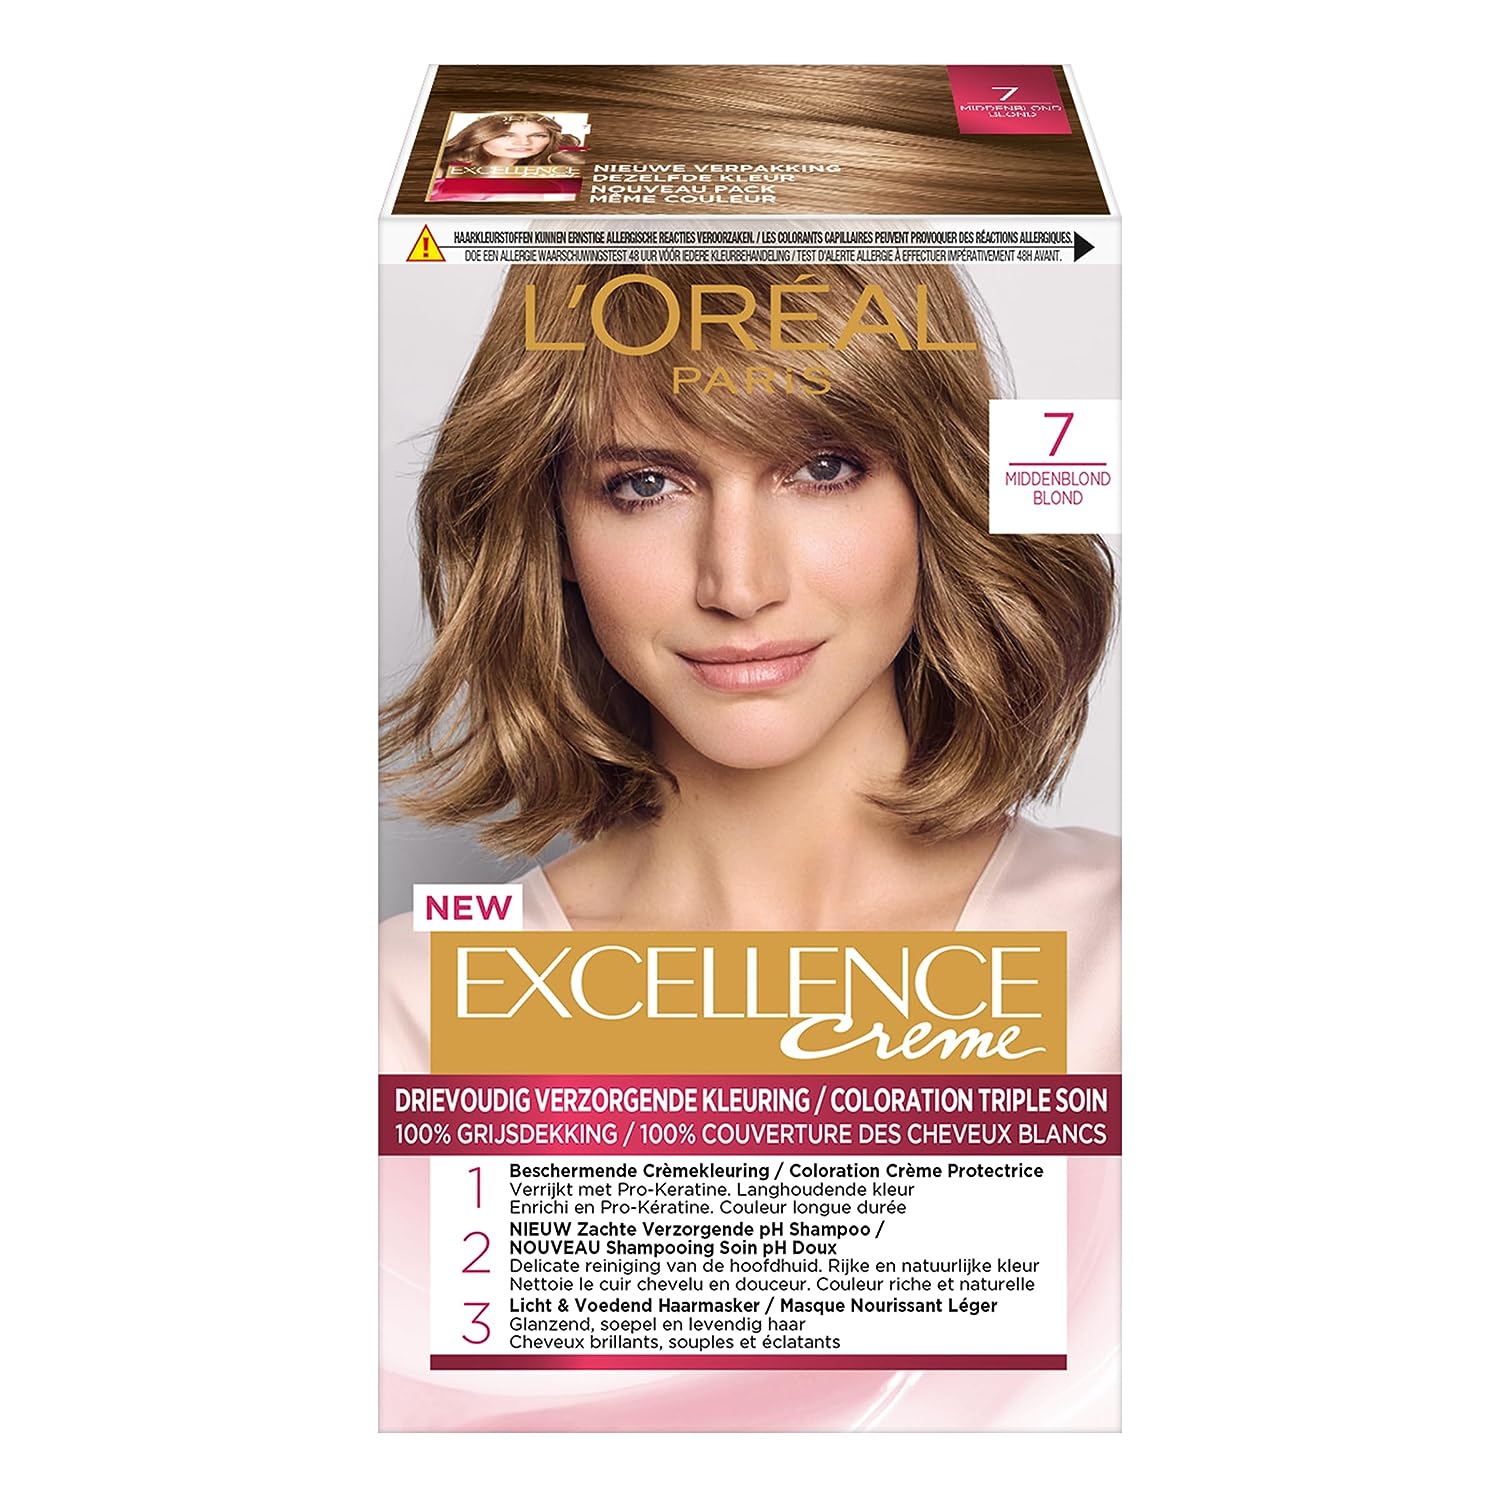 LOral Paris Excellence Crme Hair Verf - 7 Midden Blonde